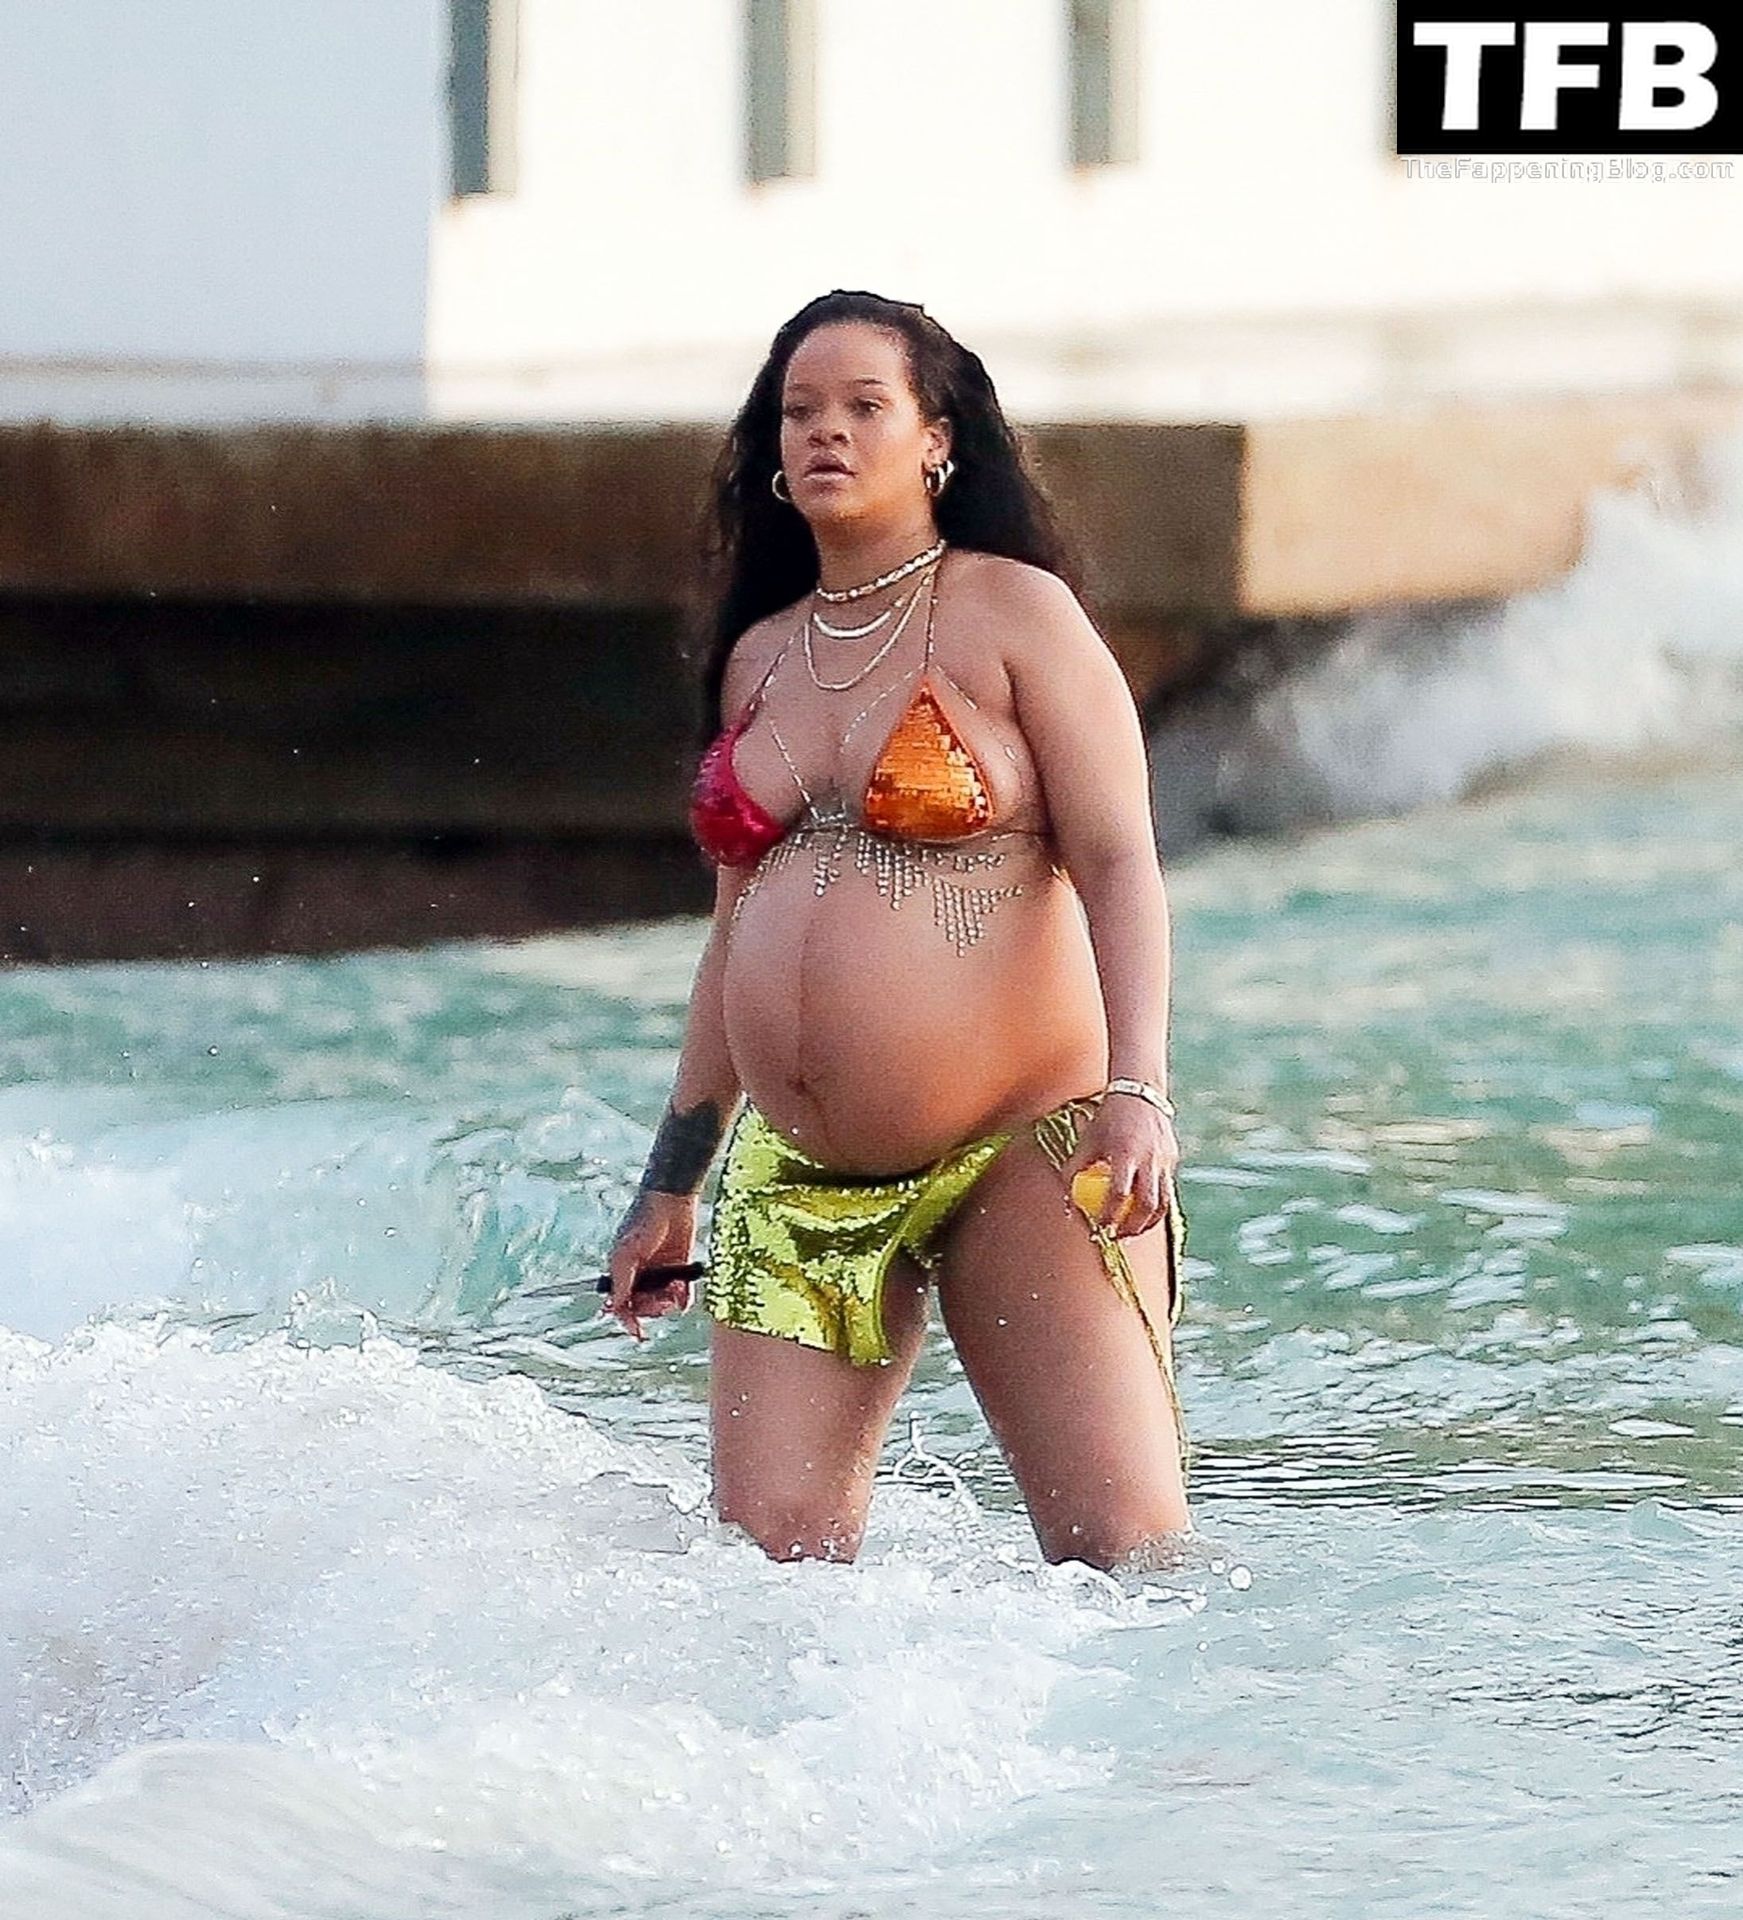 Rihanna-Sexy-The-Fappening-Blog-119-1.jpg